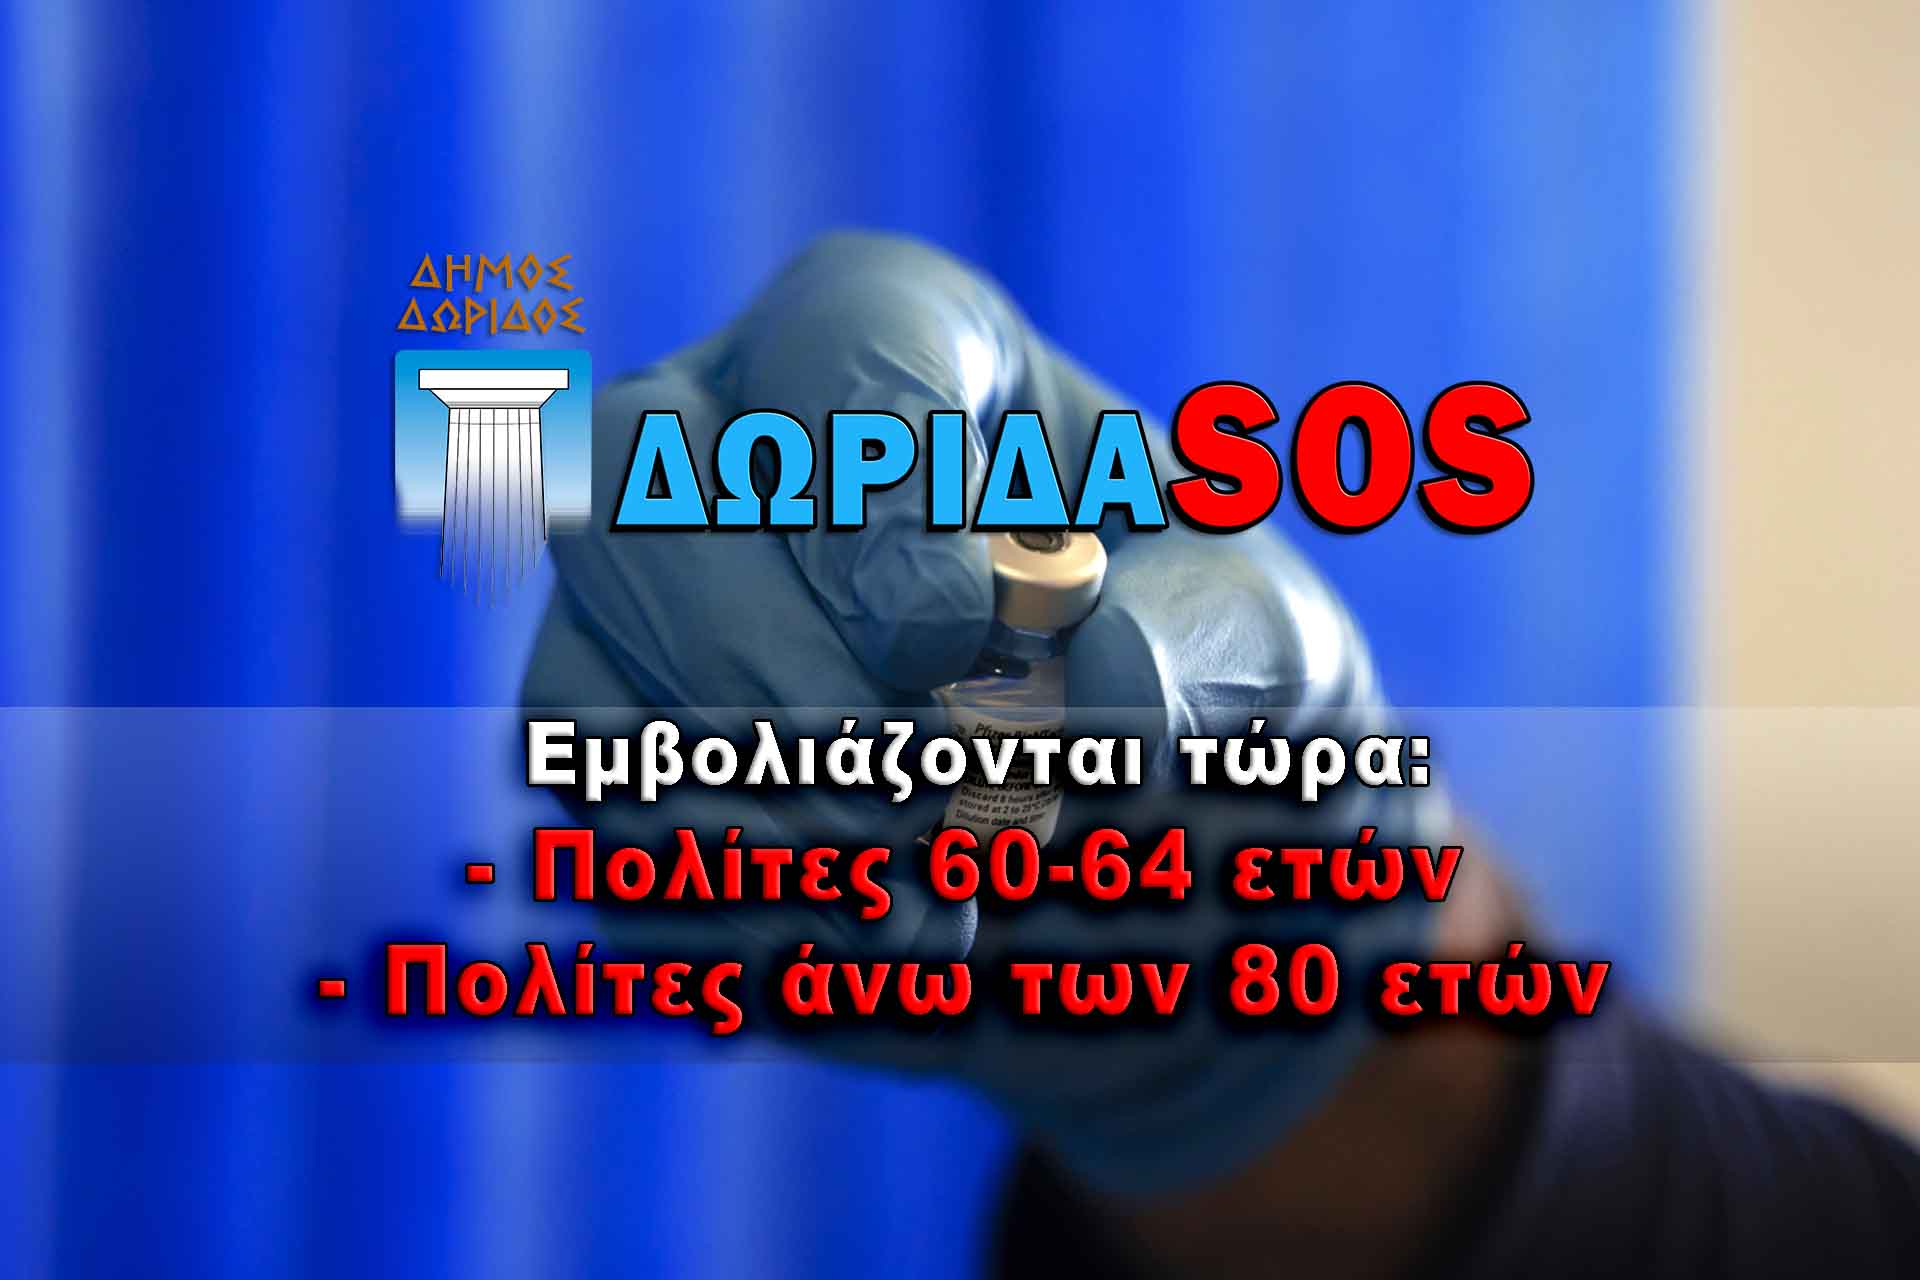 Dorida SOS Εμβολιασμός για πολίτες 60-64 και άνω των 80 ετών